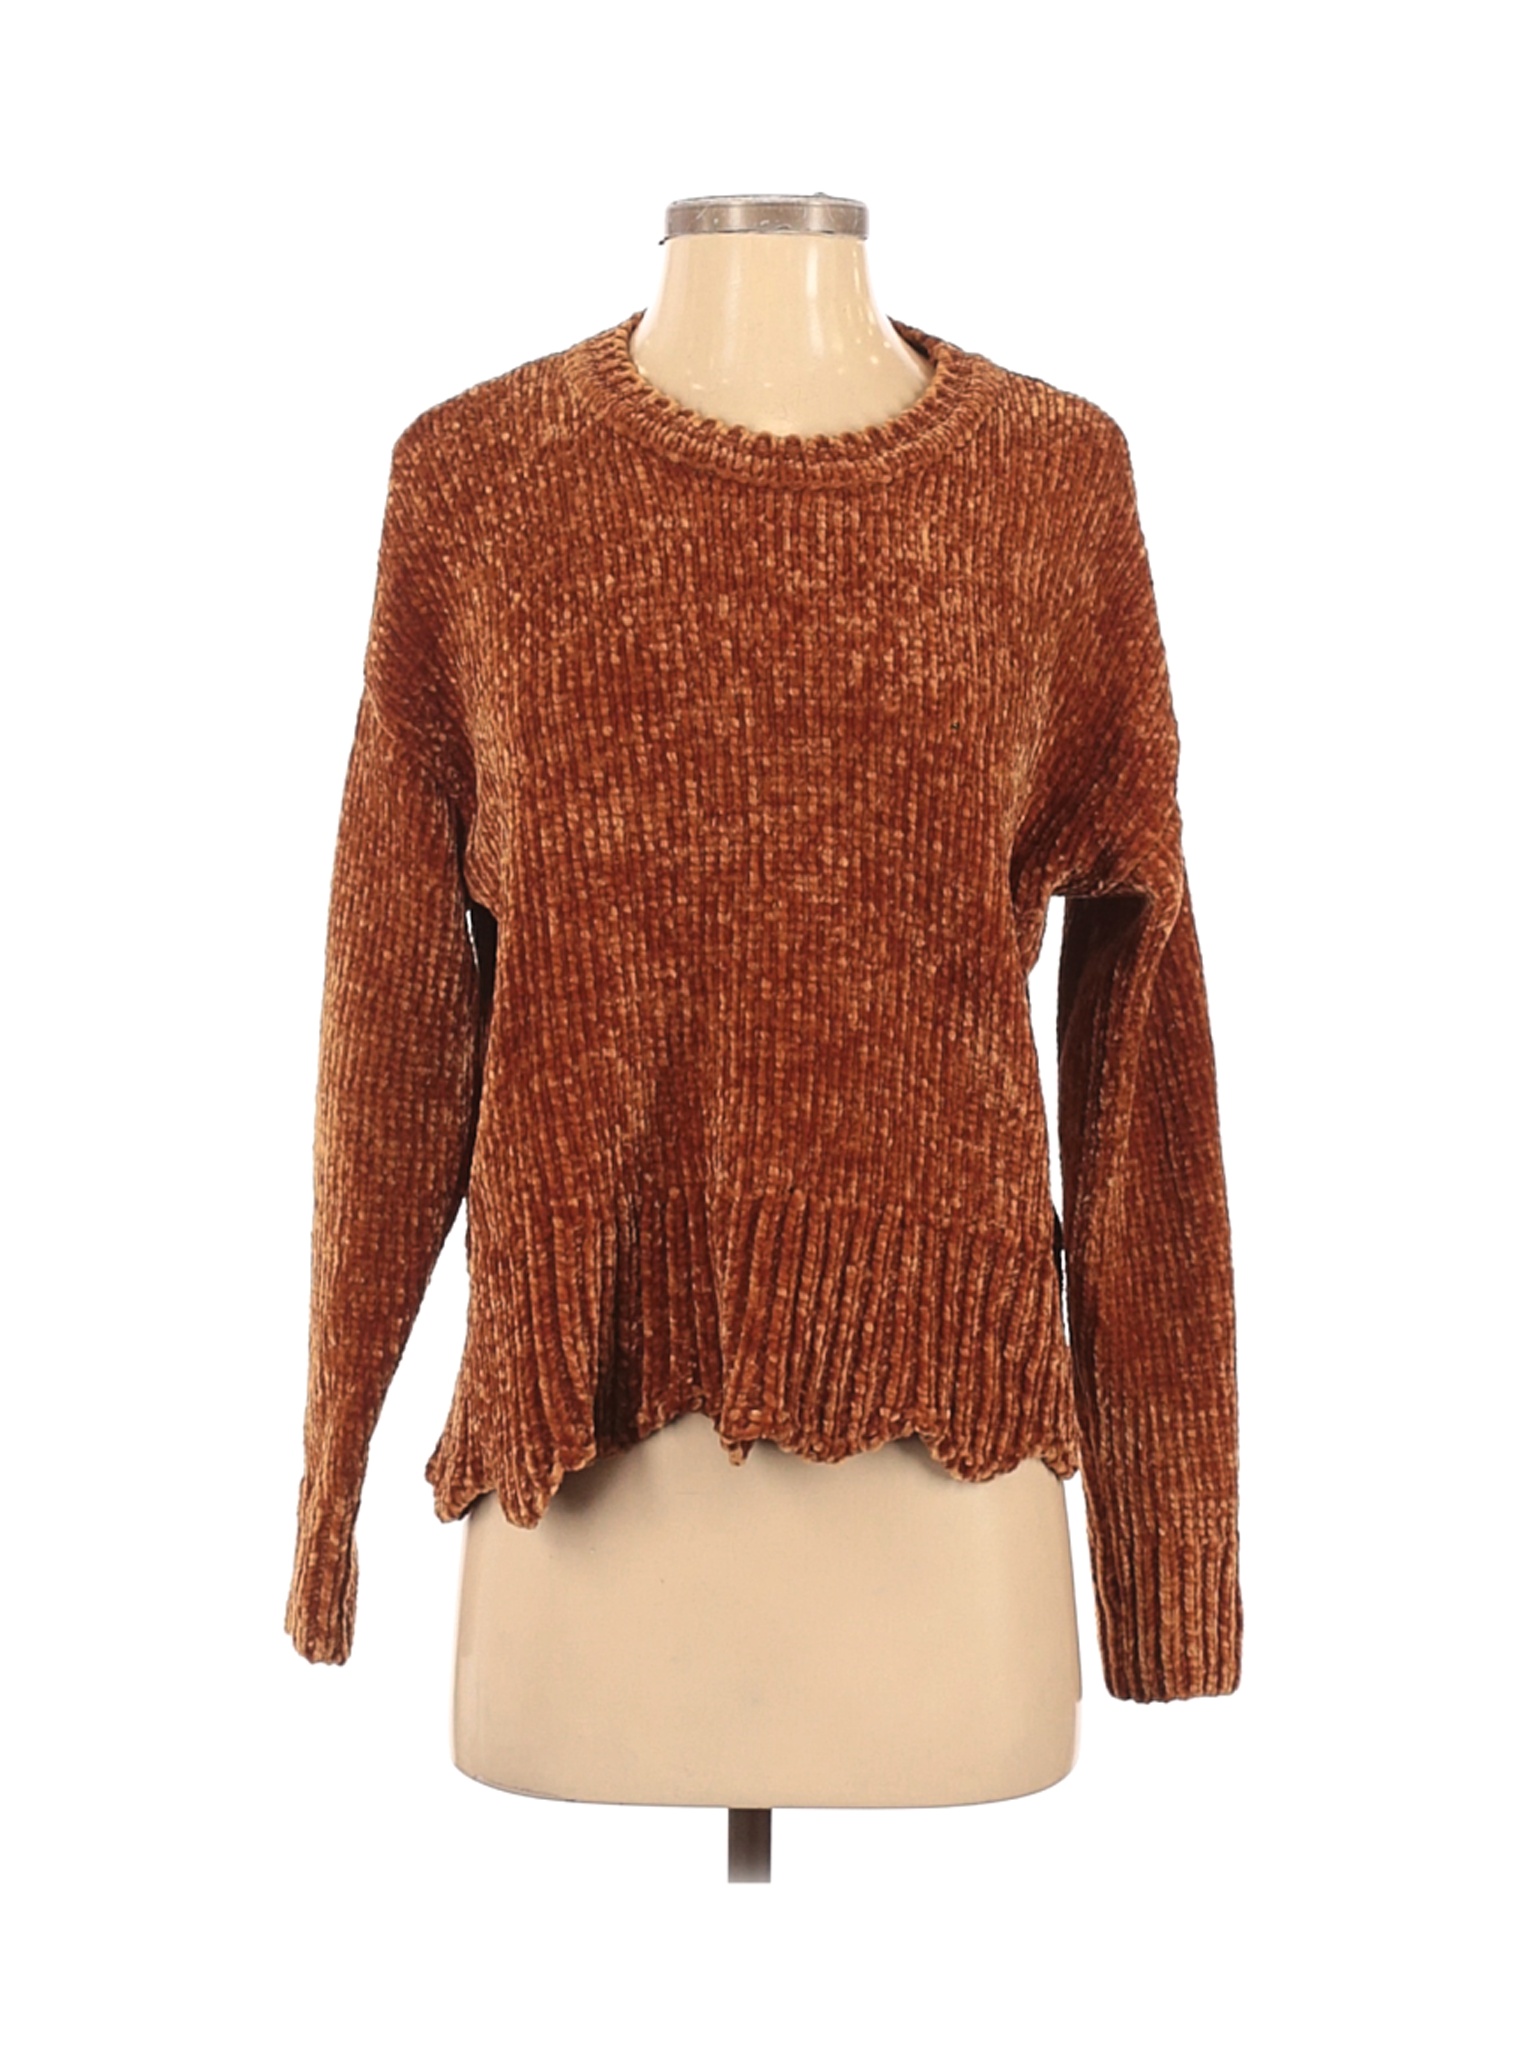 Cynthia Rowley TJX Women Brown Pullover Sweater S | eBay